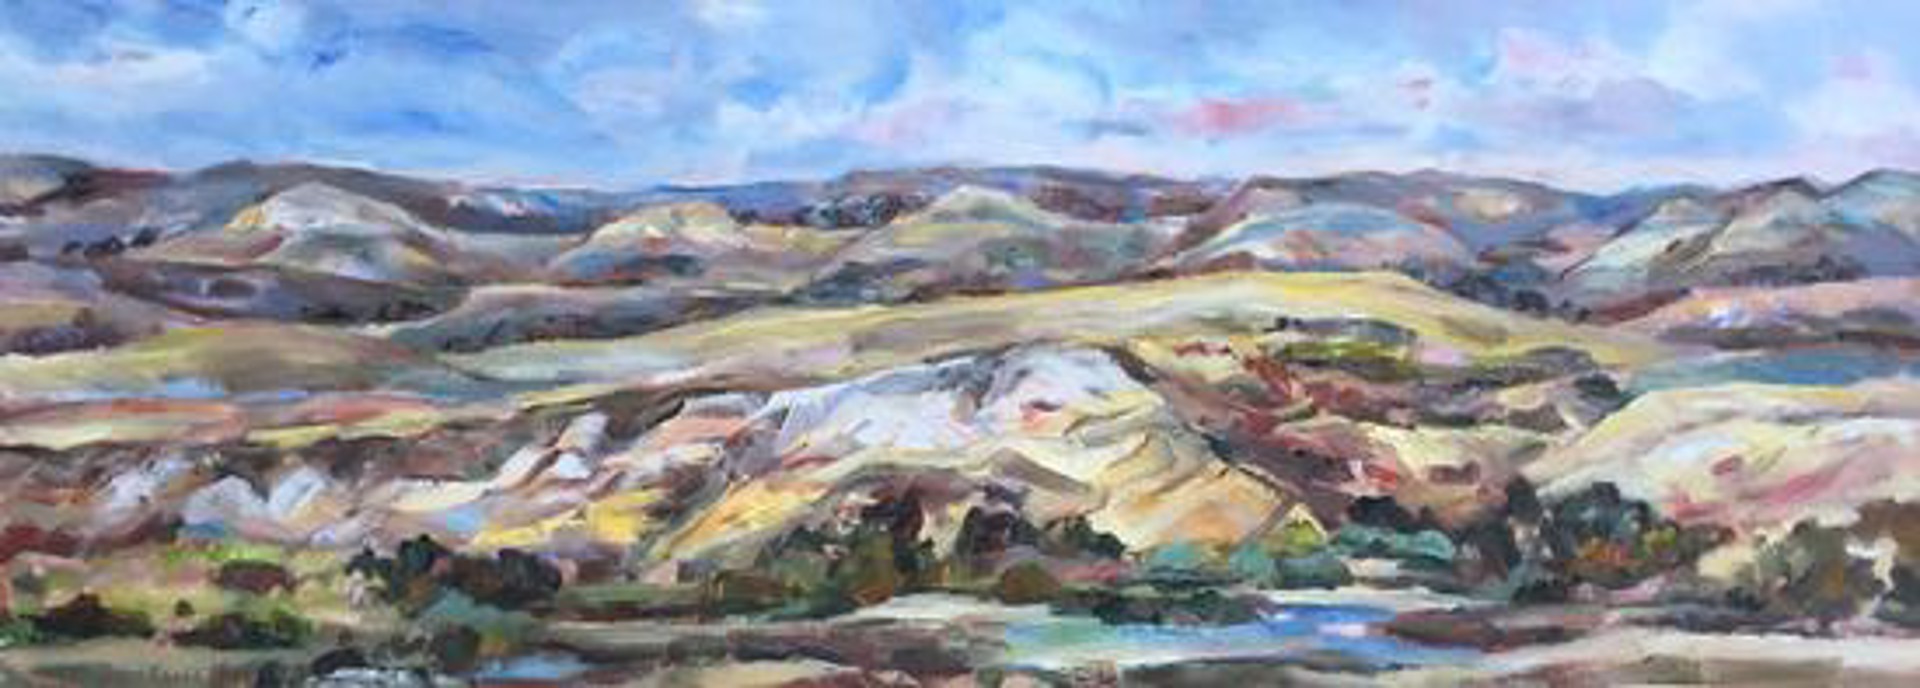 Whitemud Hills by Ravenscrag (1997) by Darlene Hay (1945-)